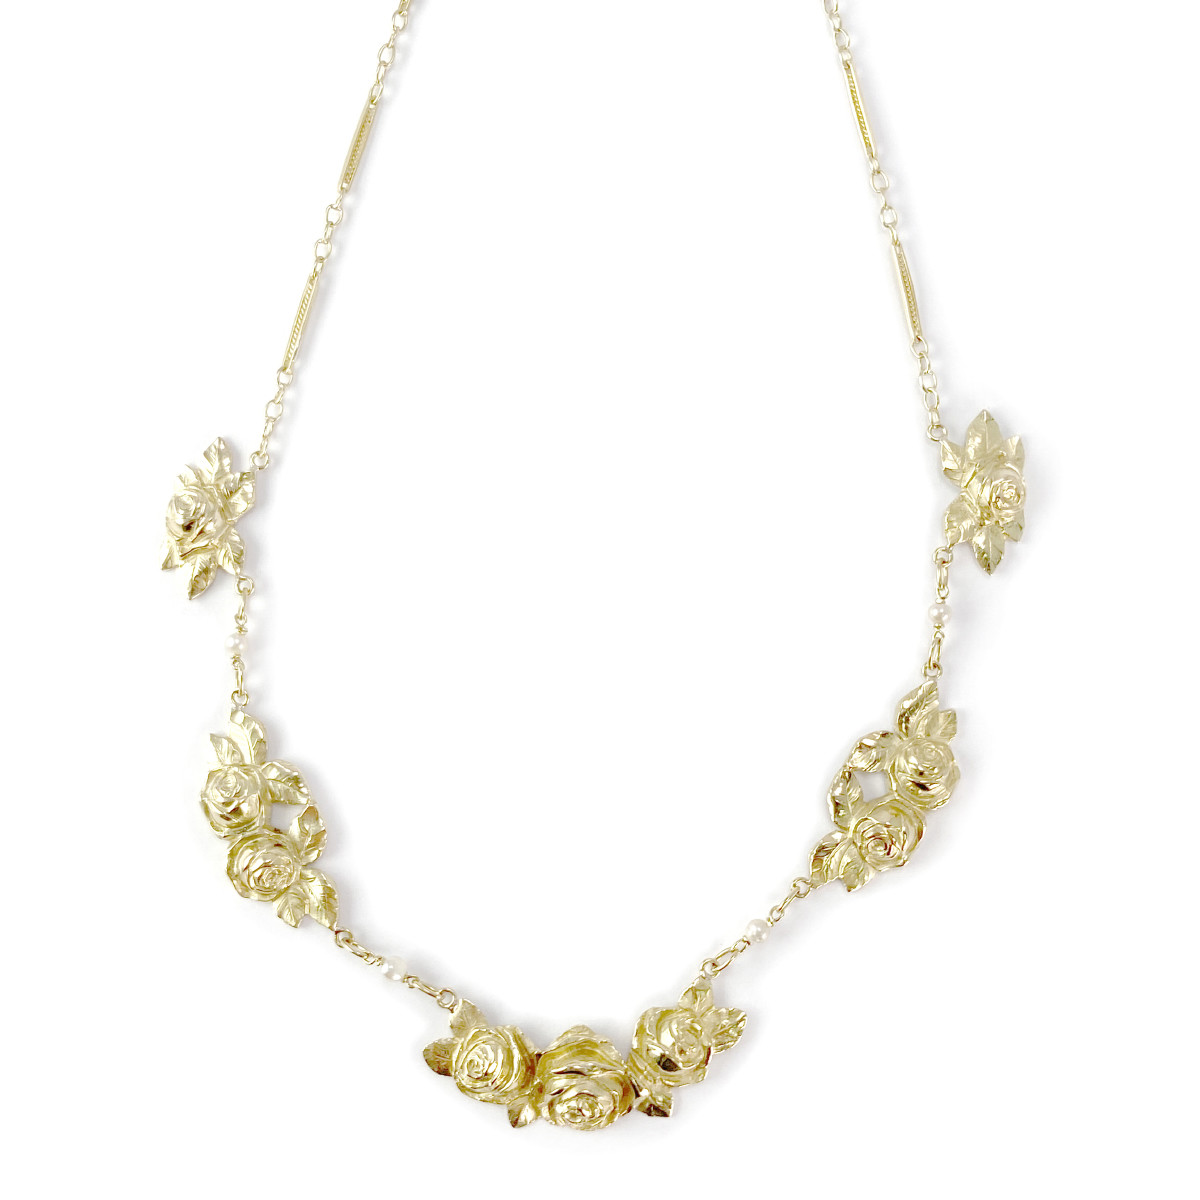 Collier d'occasion or 750 jaune maille fantaisie perles de culture blanches 41 cm